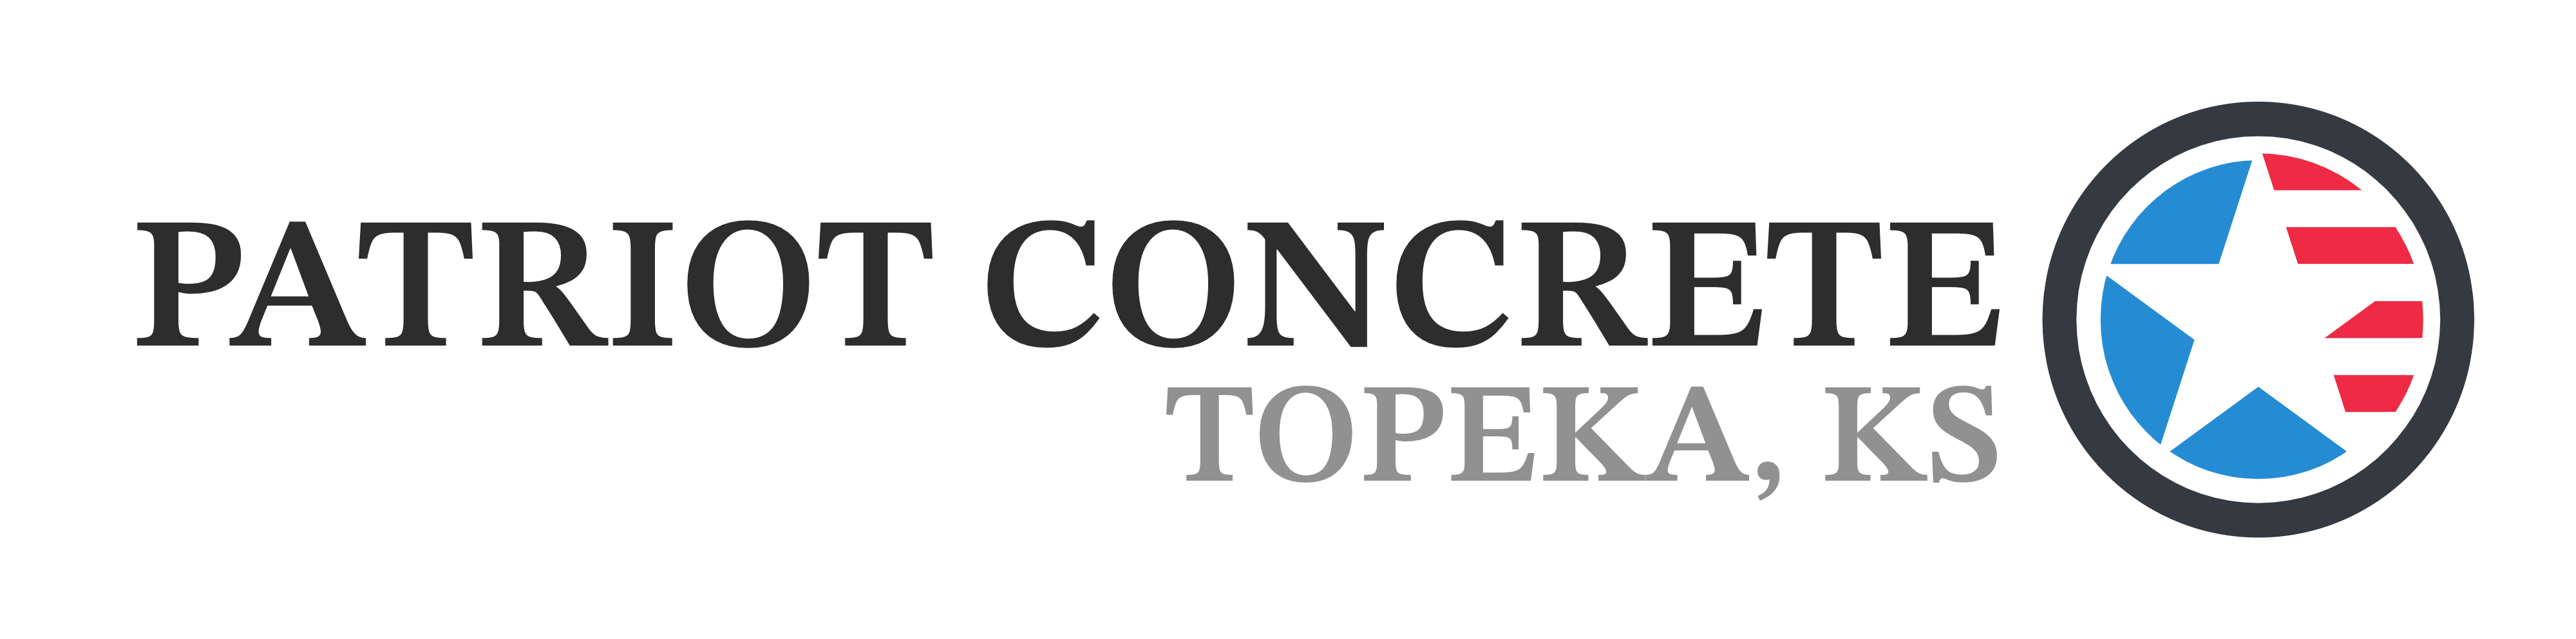 Patriot Concrete of Topeka, KS